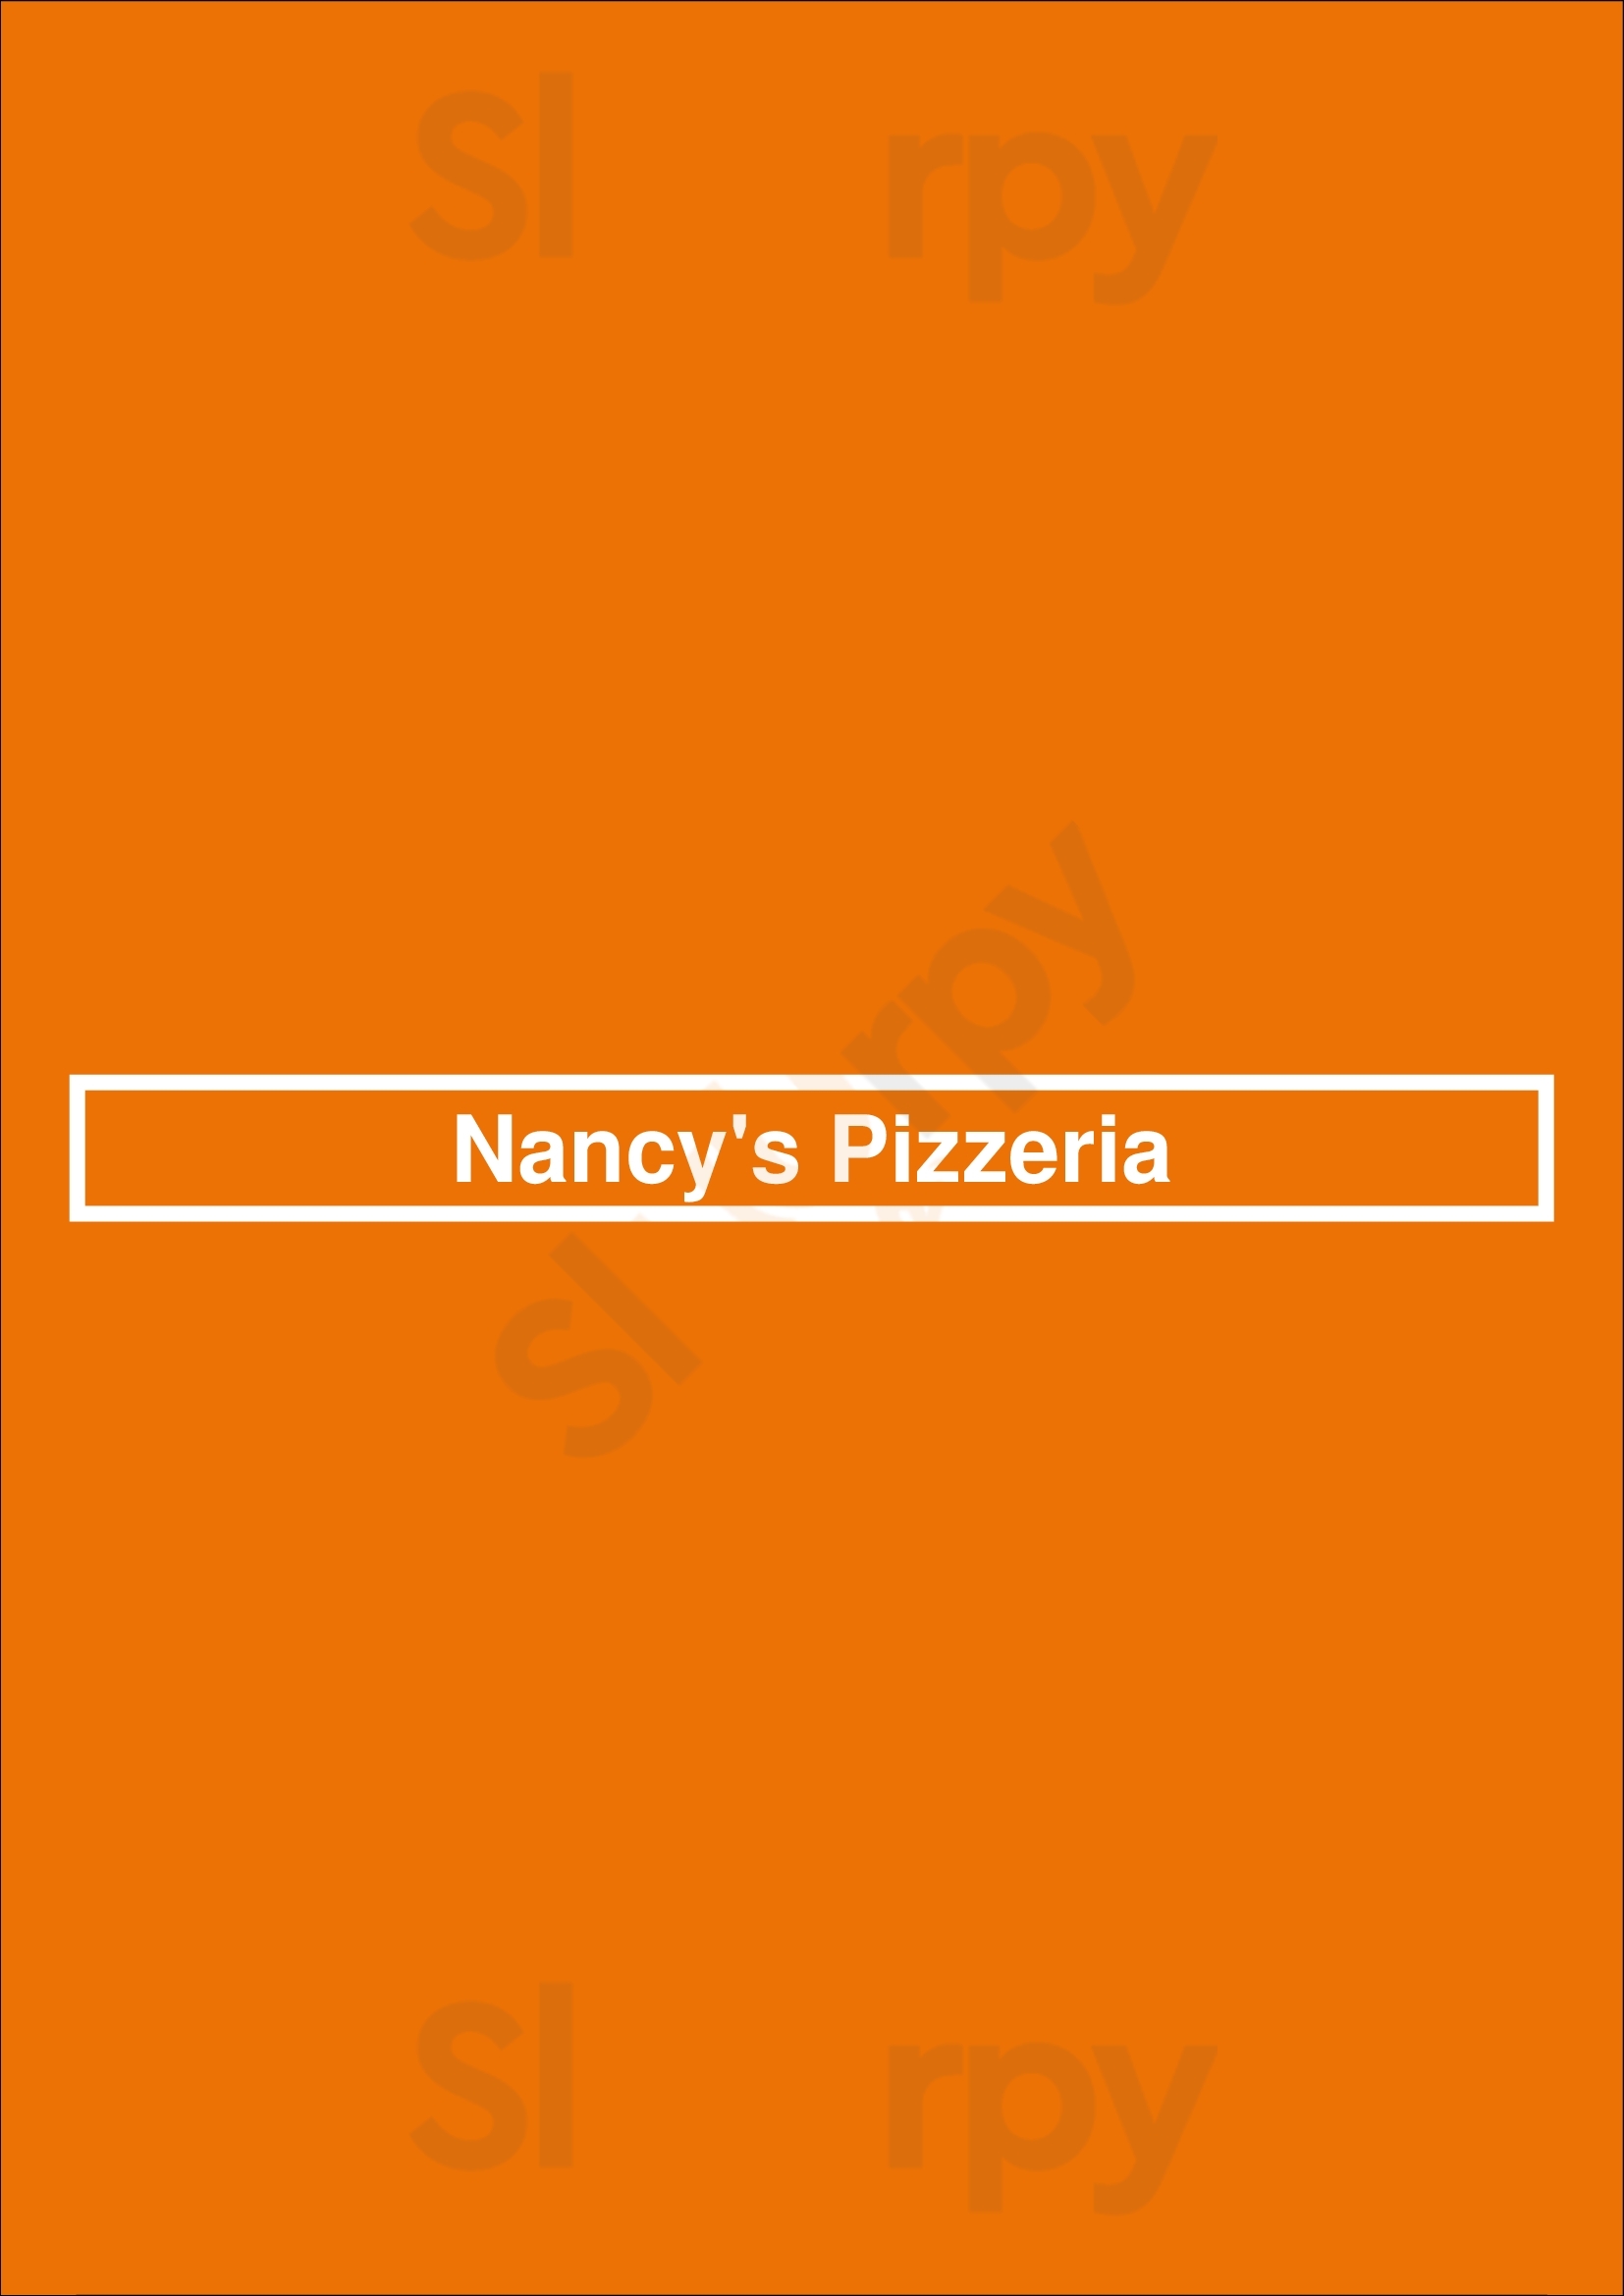 Nancy's Pizzeria Conyers Menu - 1